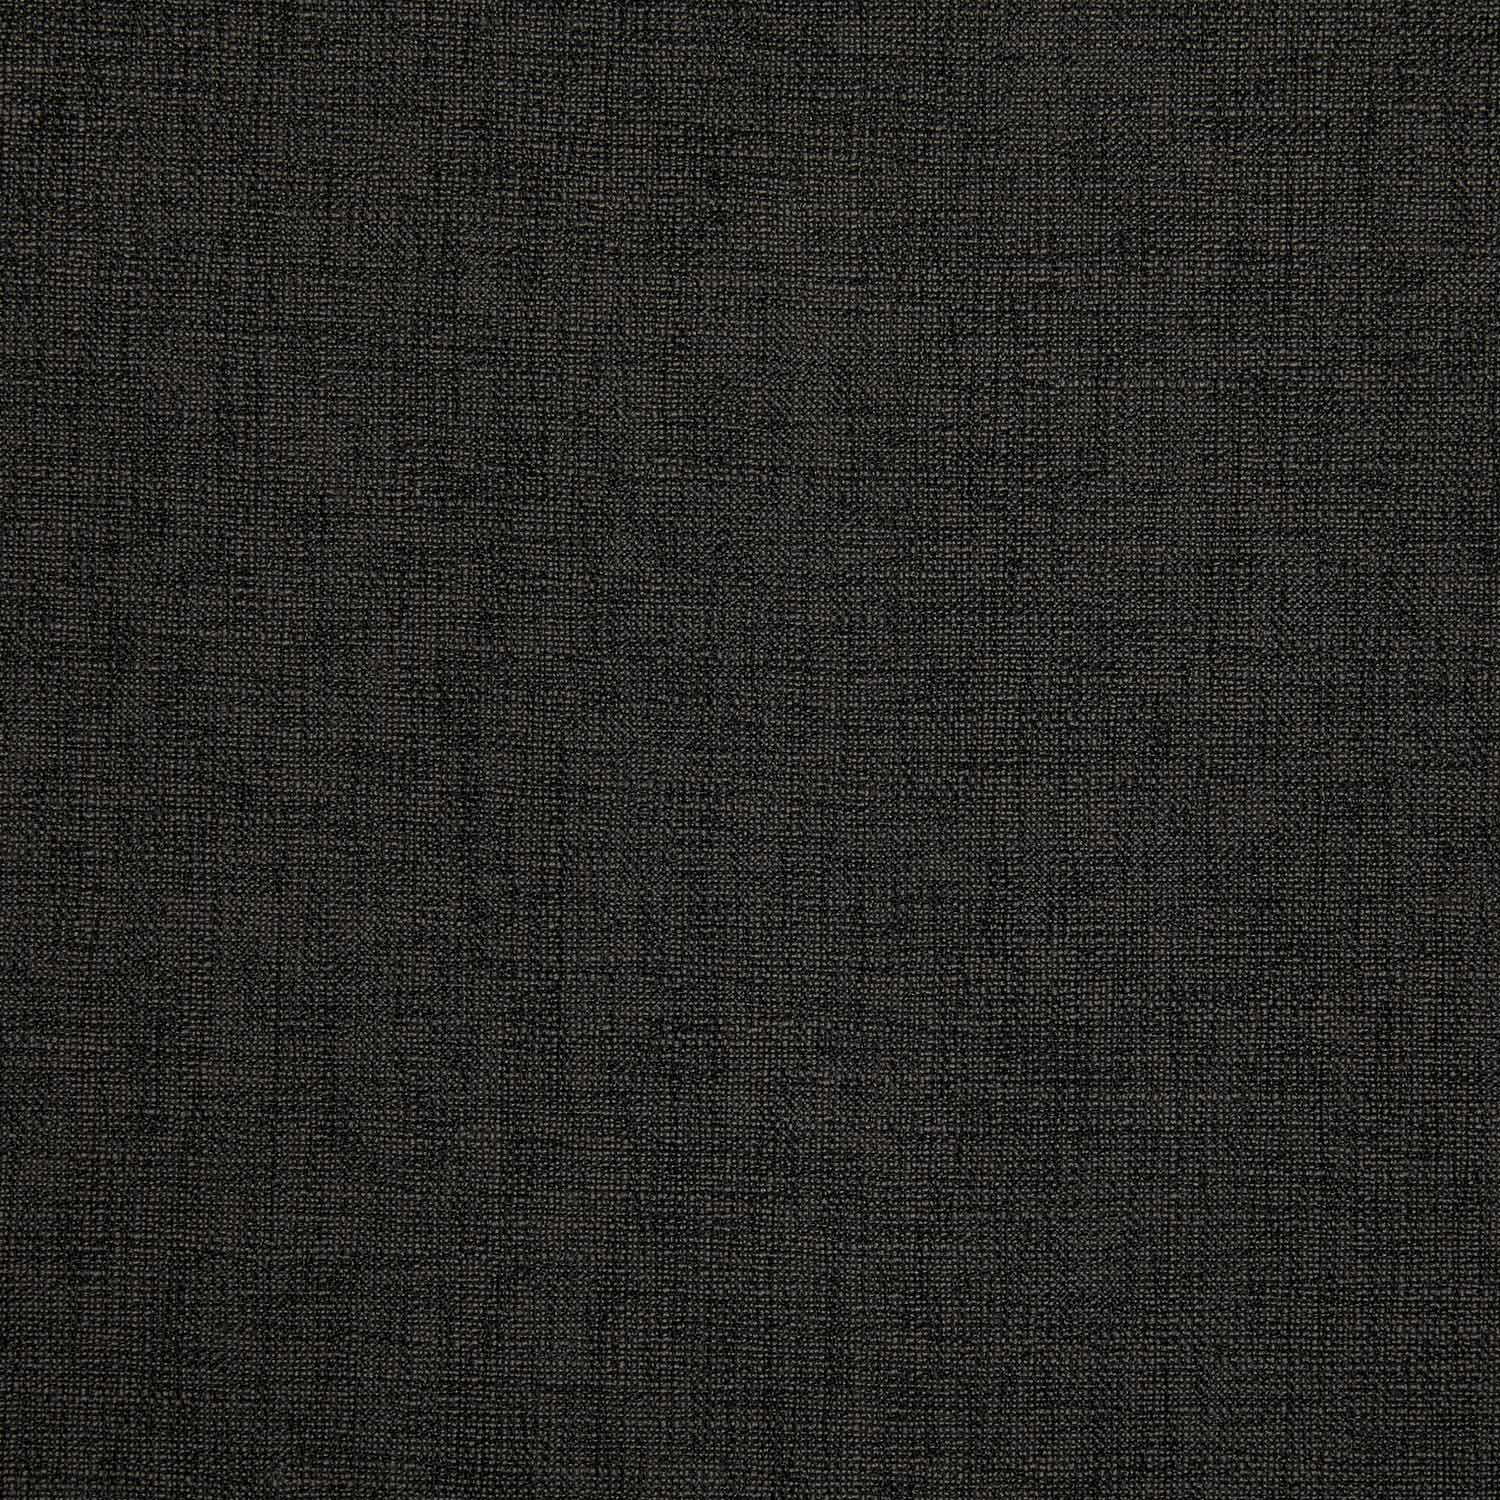 Aspen Granite custom fabric